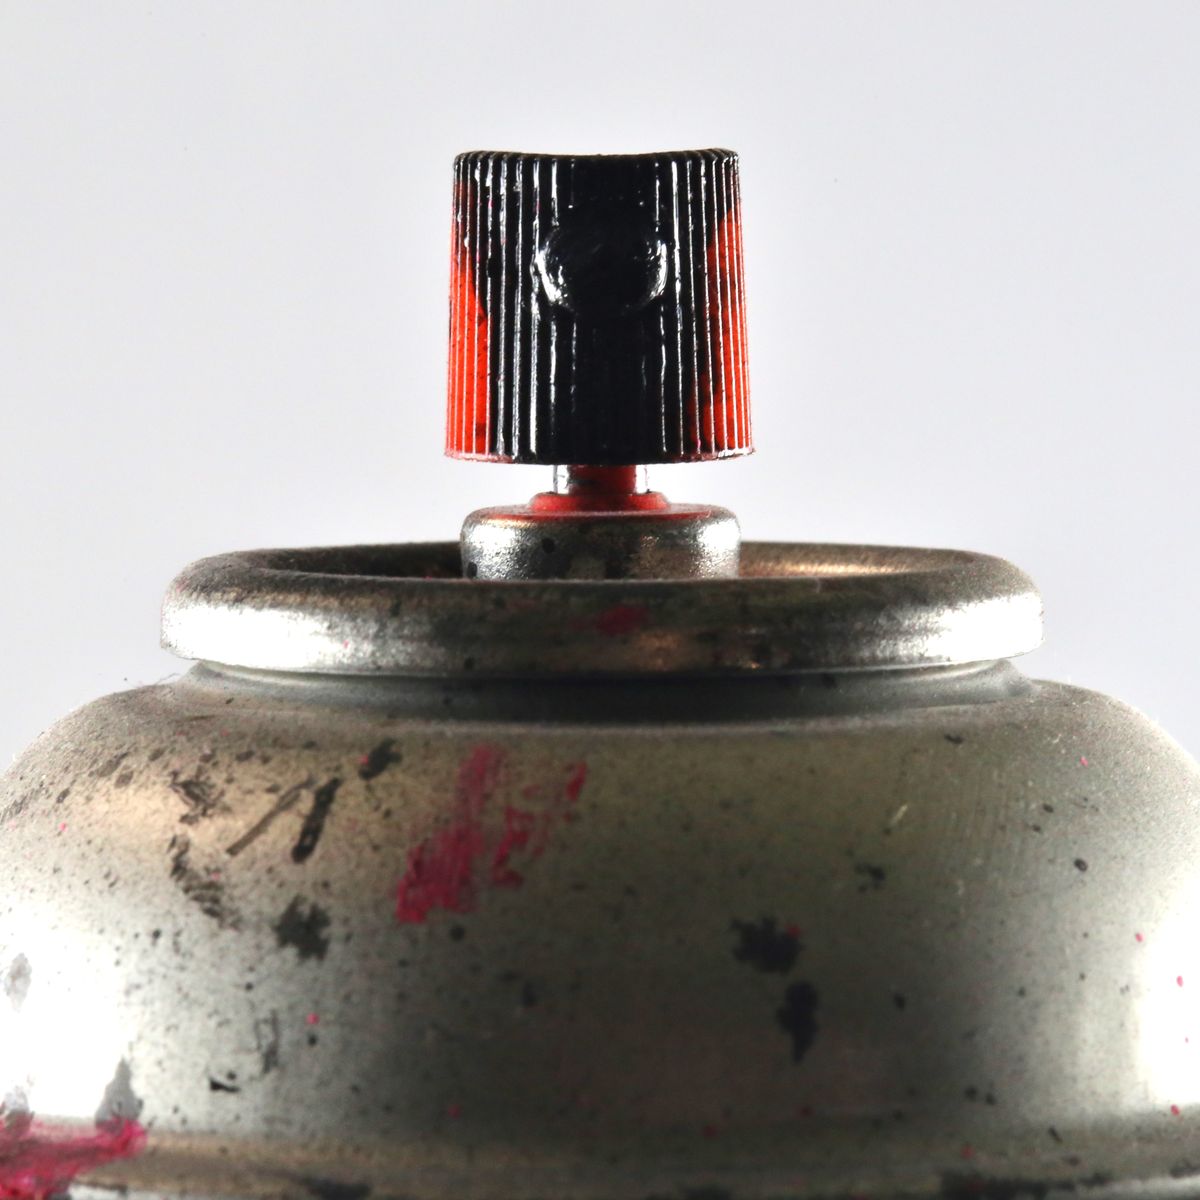 aerosol spray can with paint splatter